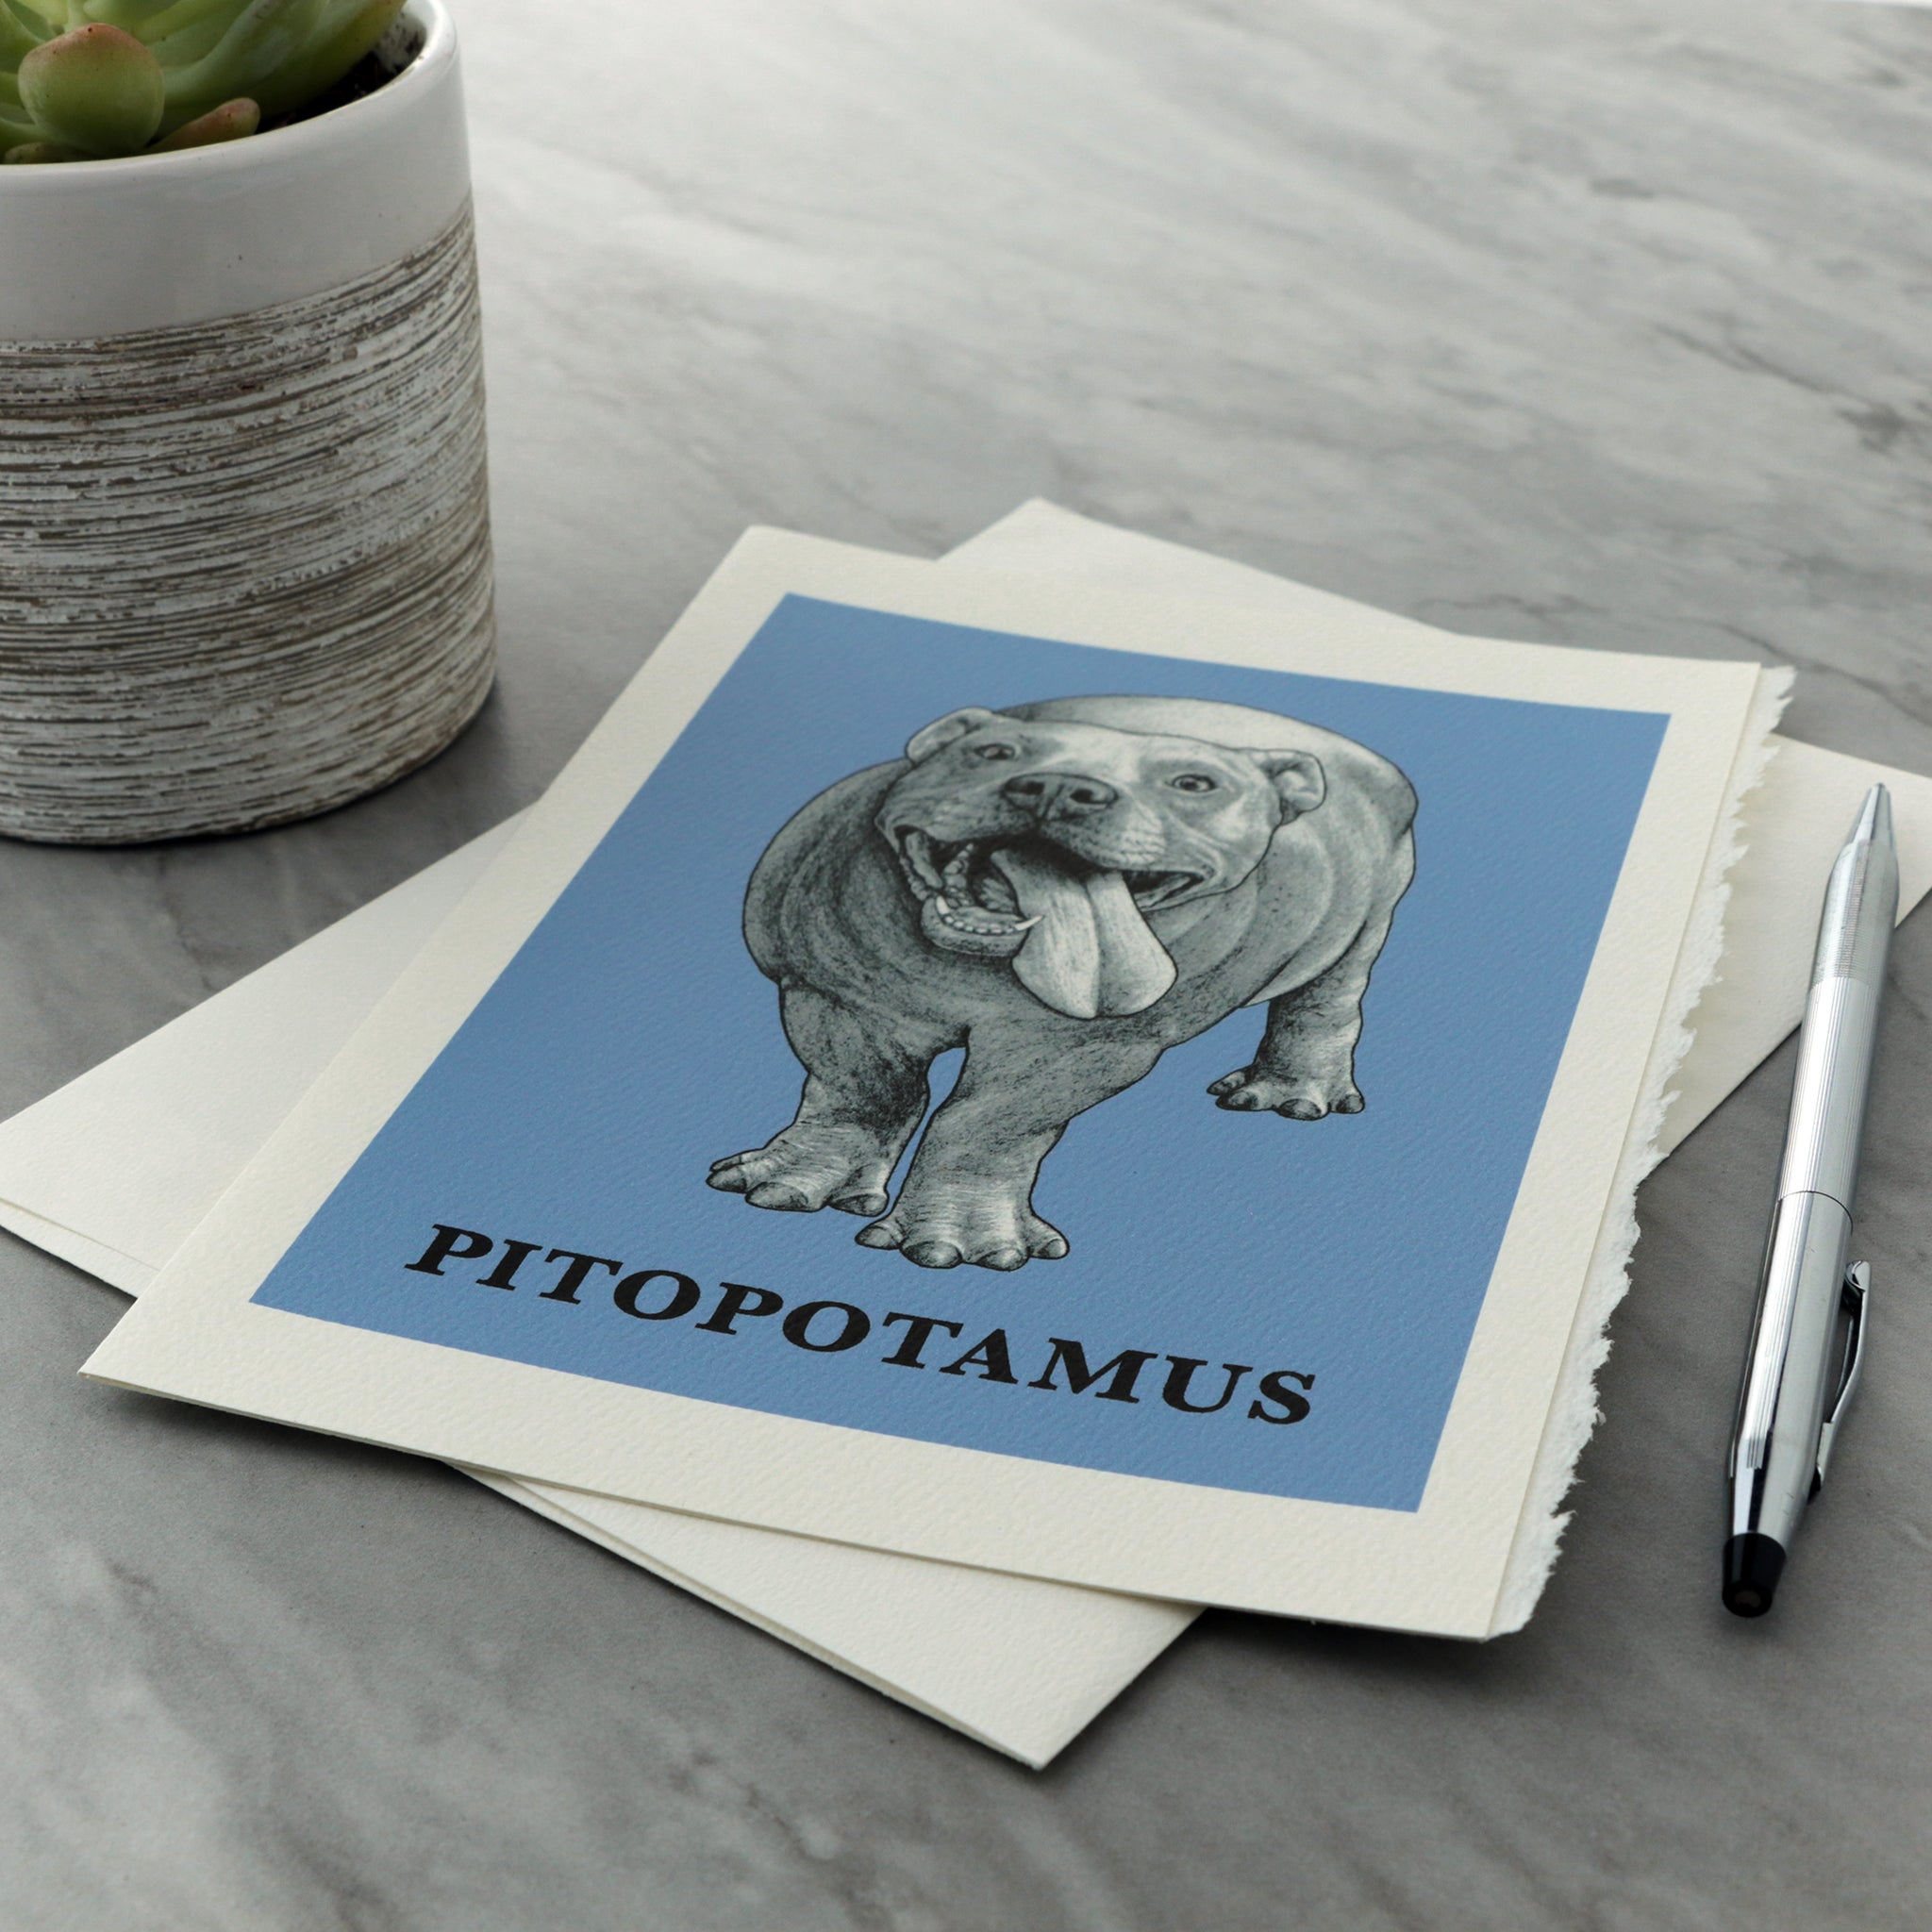 Pitopotamus 5x7" Greeting Card